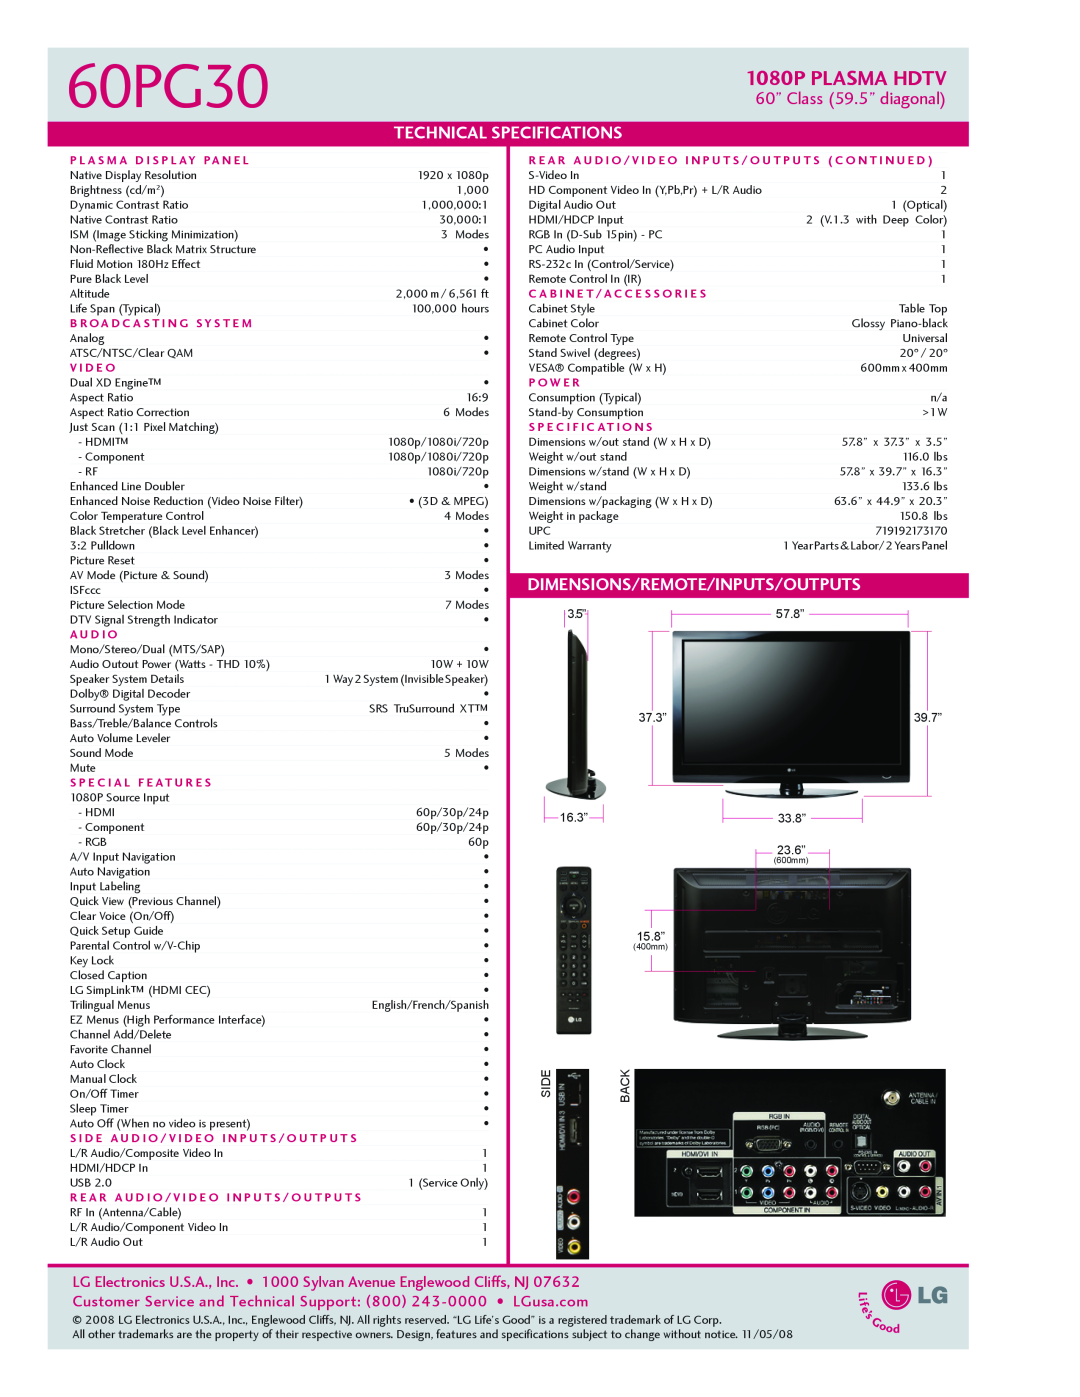 Philips 60PG30 manual LG Electronics U.S.A., Inc. 1000 Sylvan Avenue Englewood Cliffs, NJ, 1080P PLASMA HDTV, Technical 